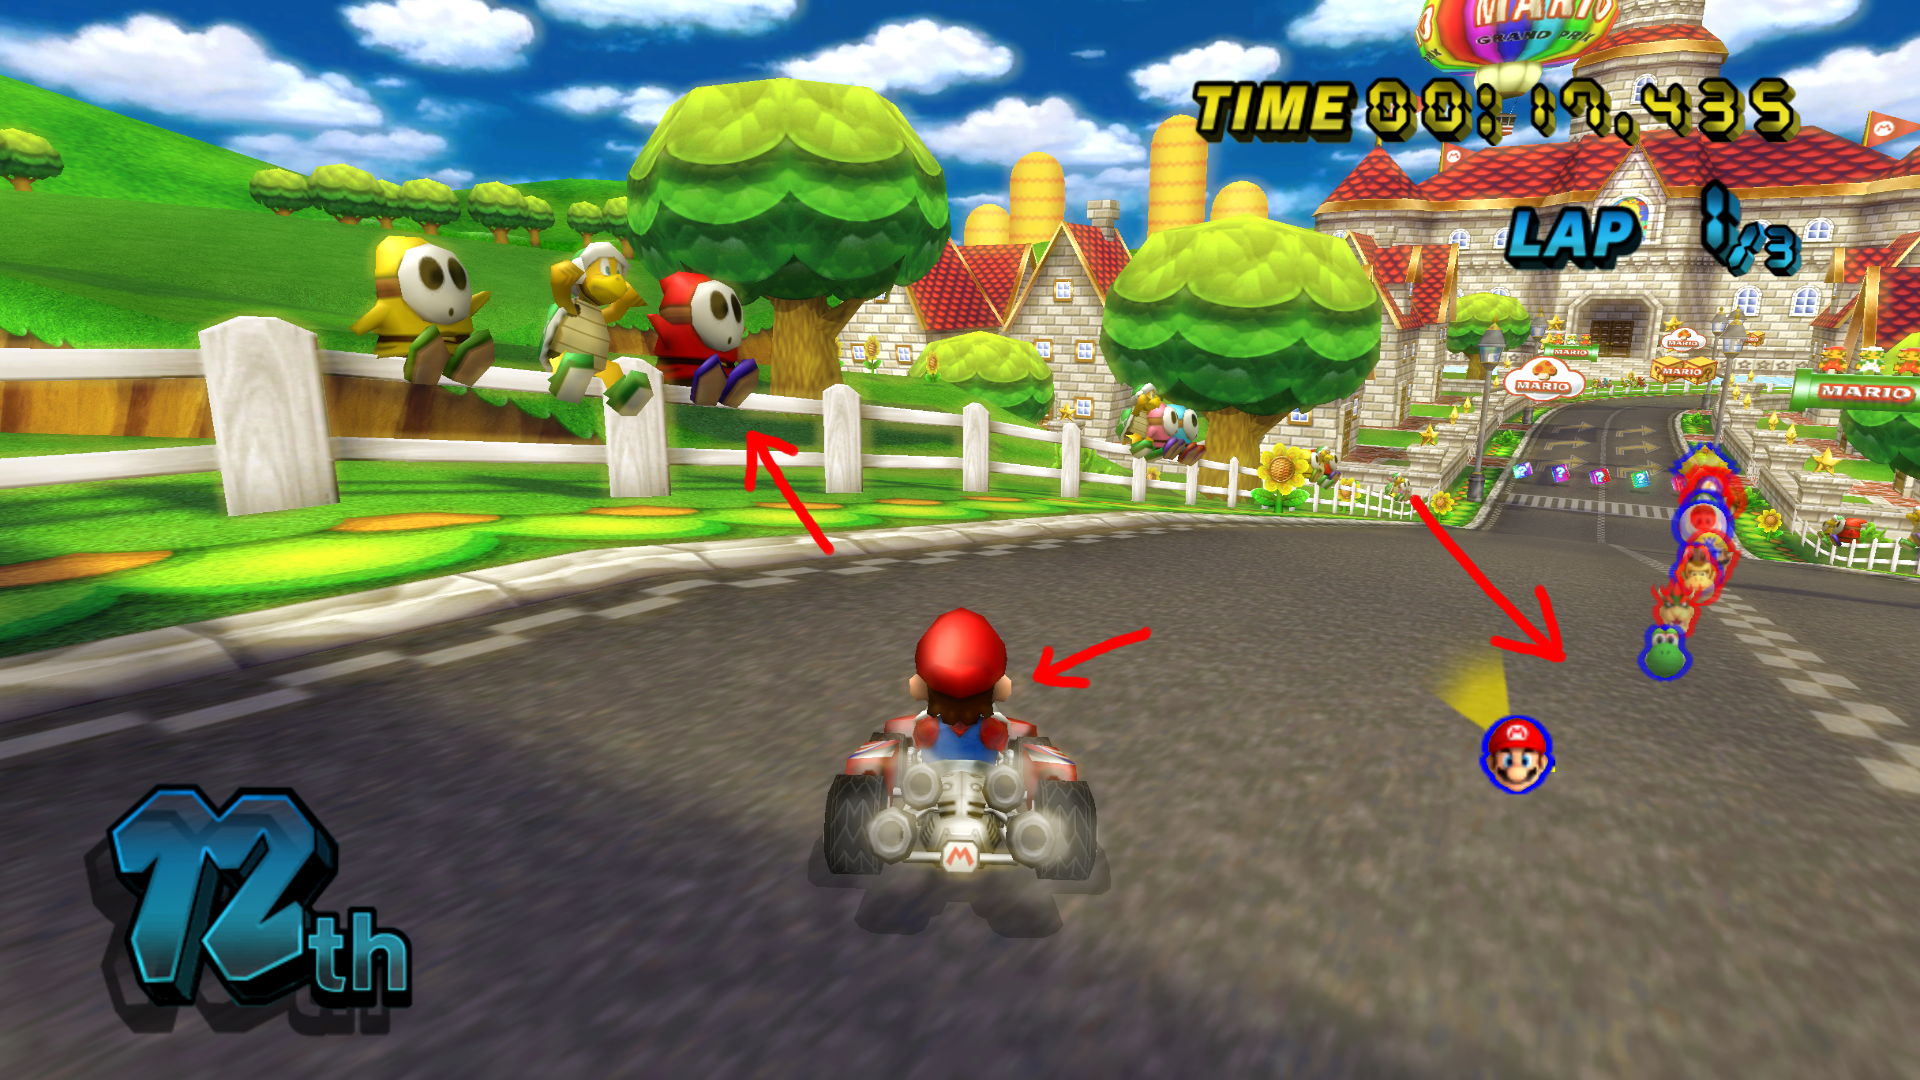 Secreto Víctor Quedar asombrado Dolphin, the GameCube and Wii emulator - Forums - [Wii] Mario Kart Wii